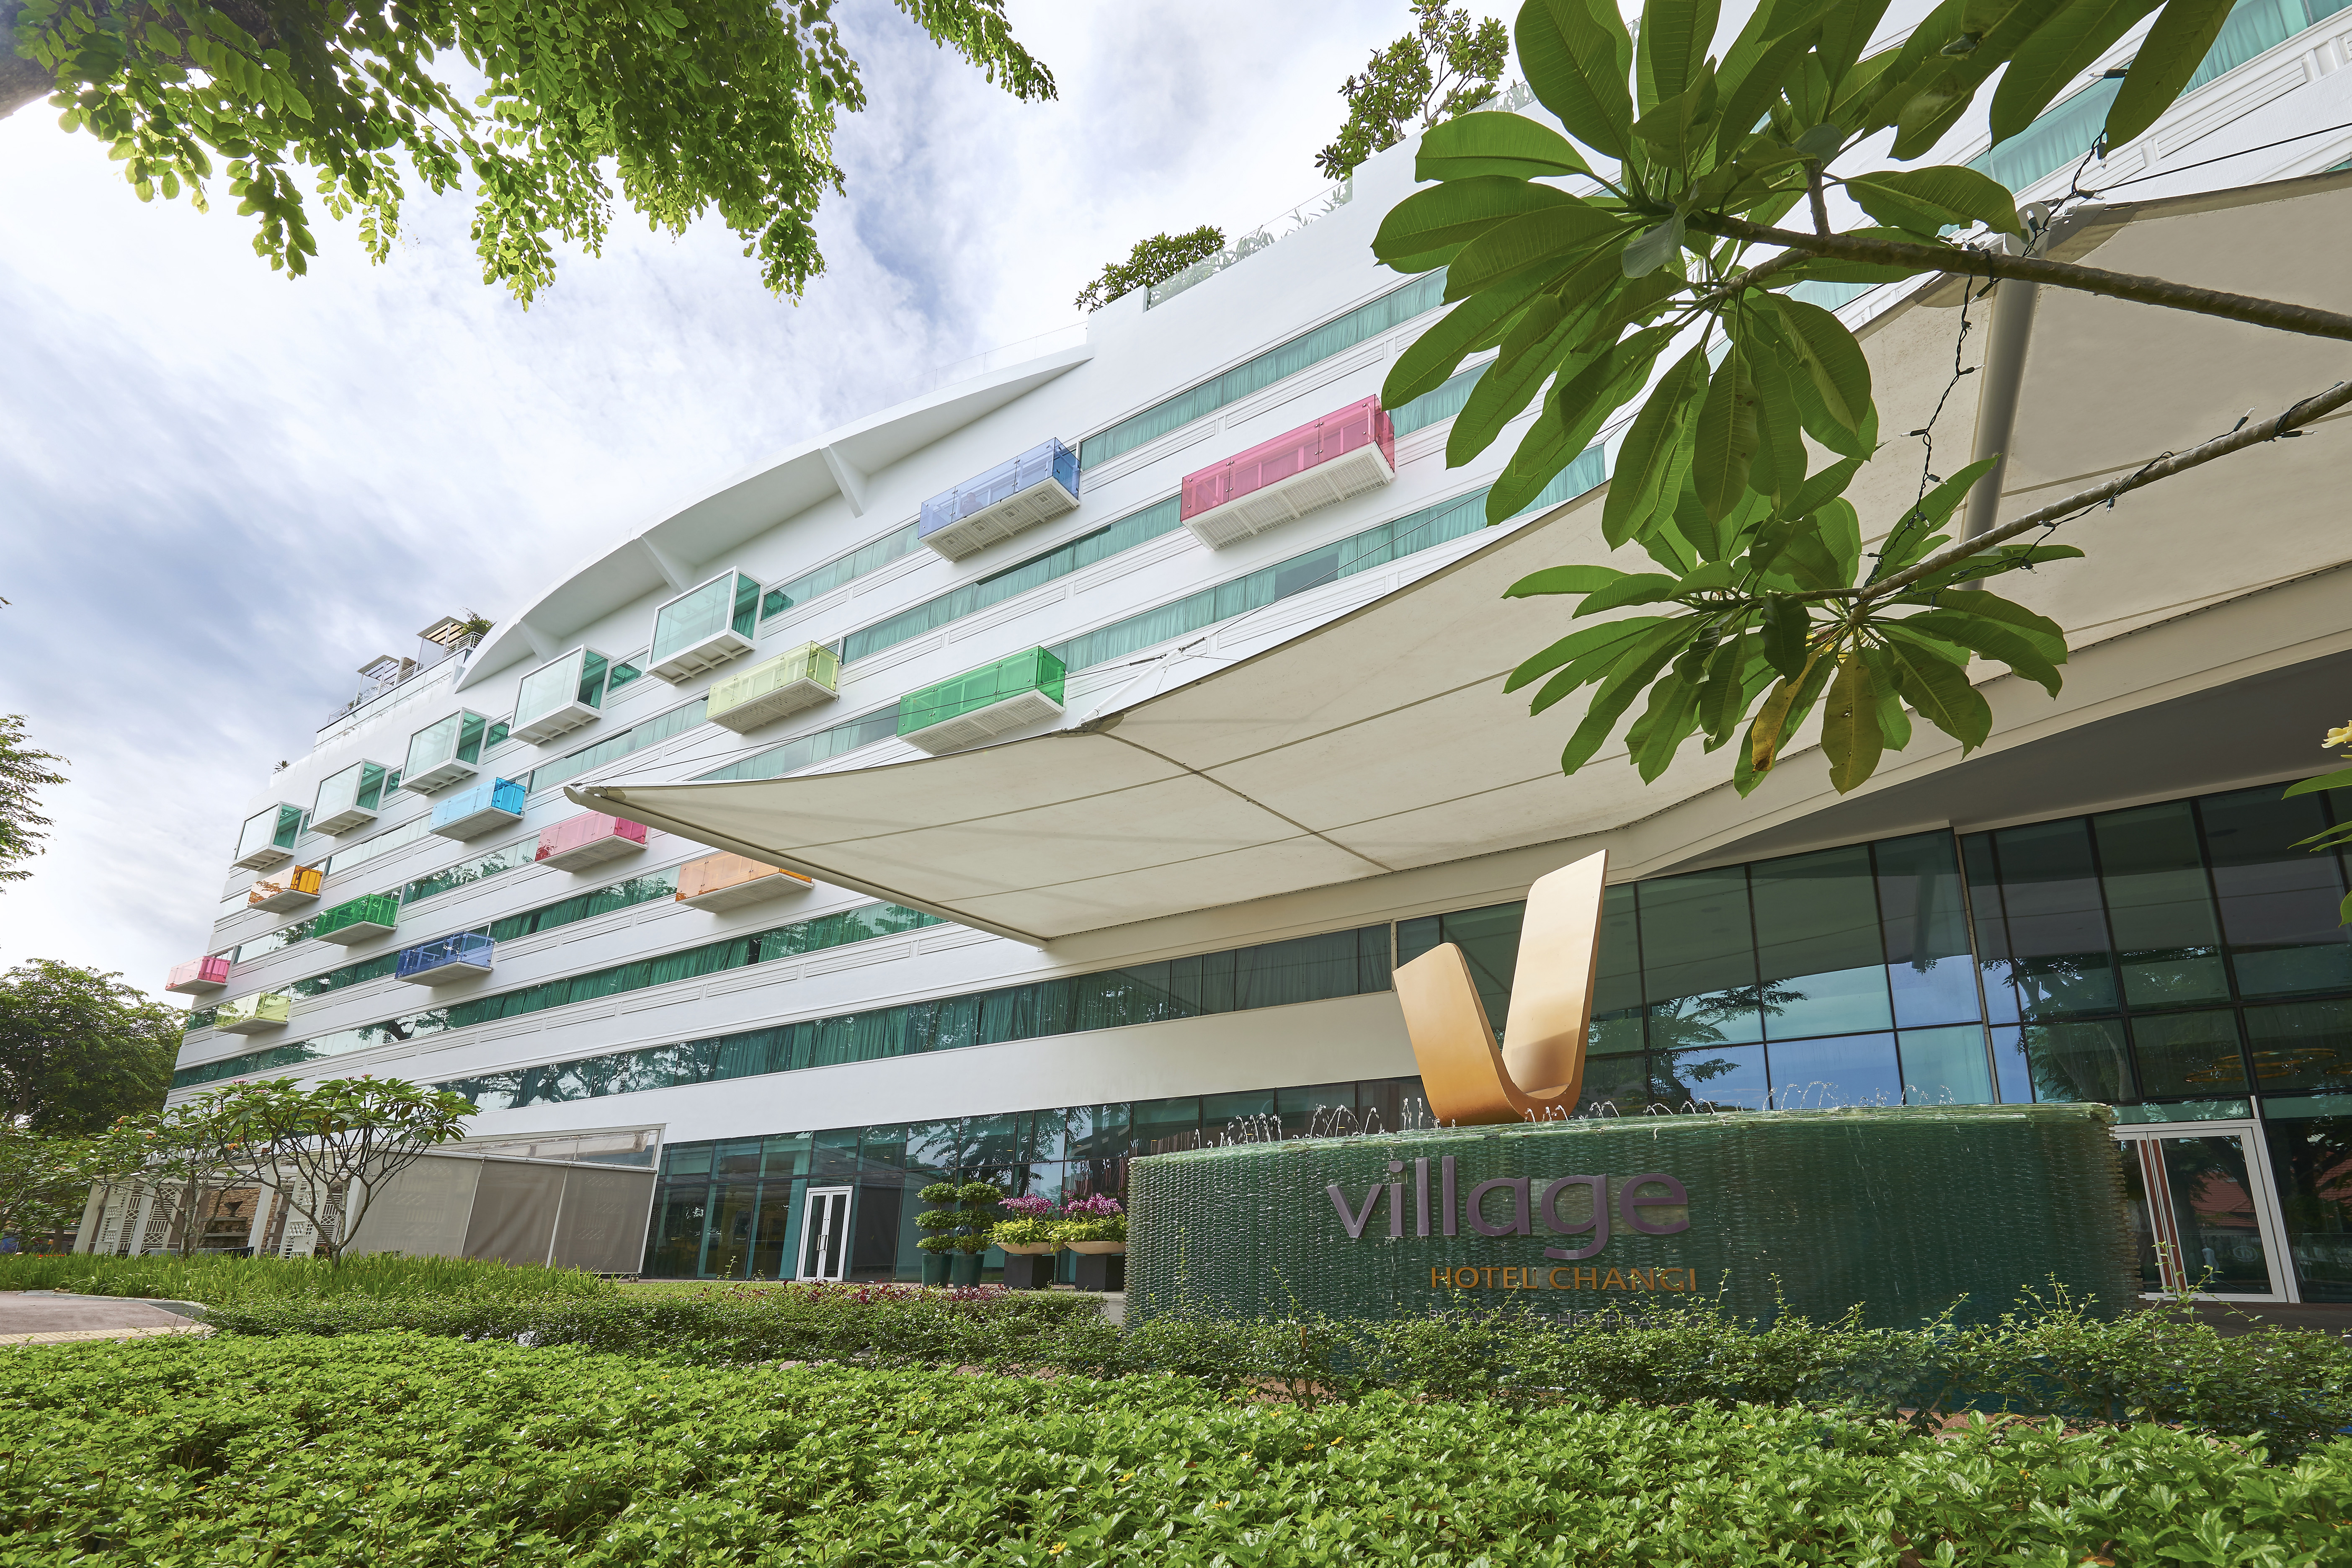 Village Hotel Changi